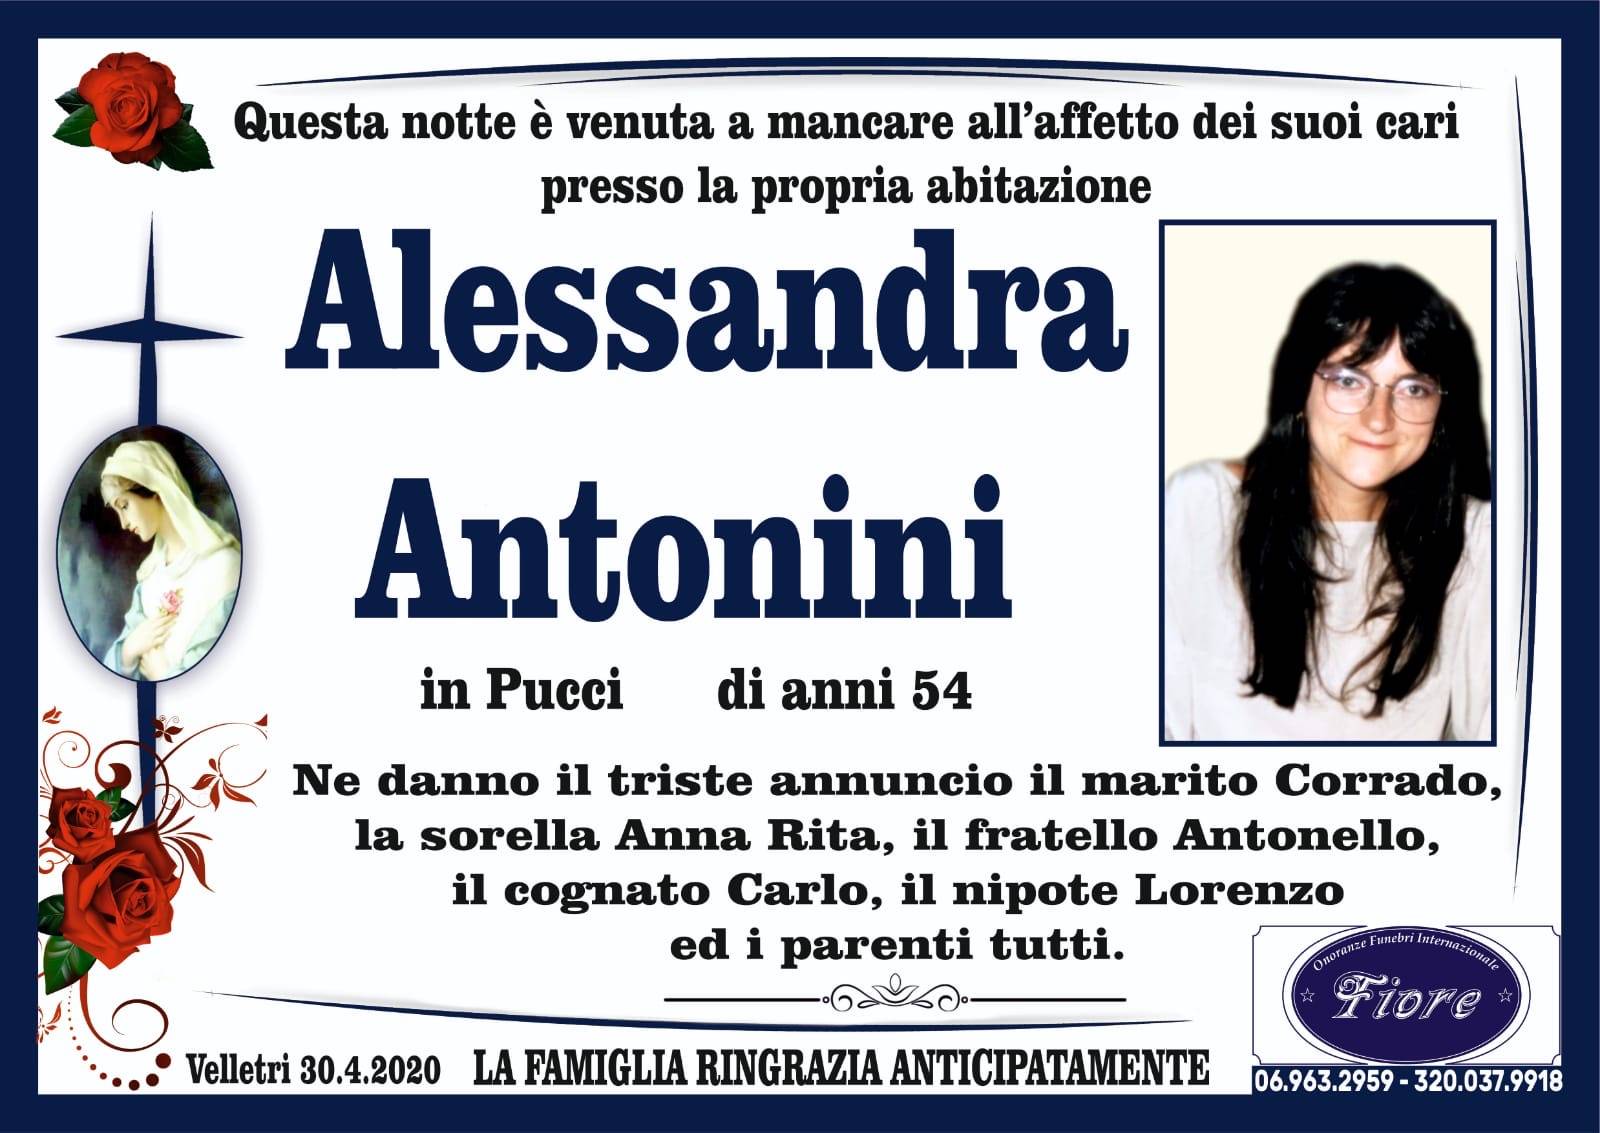 Alessandra Antonini